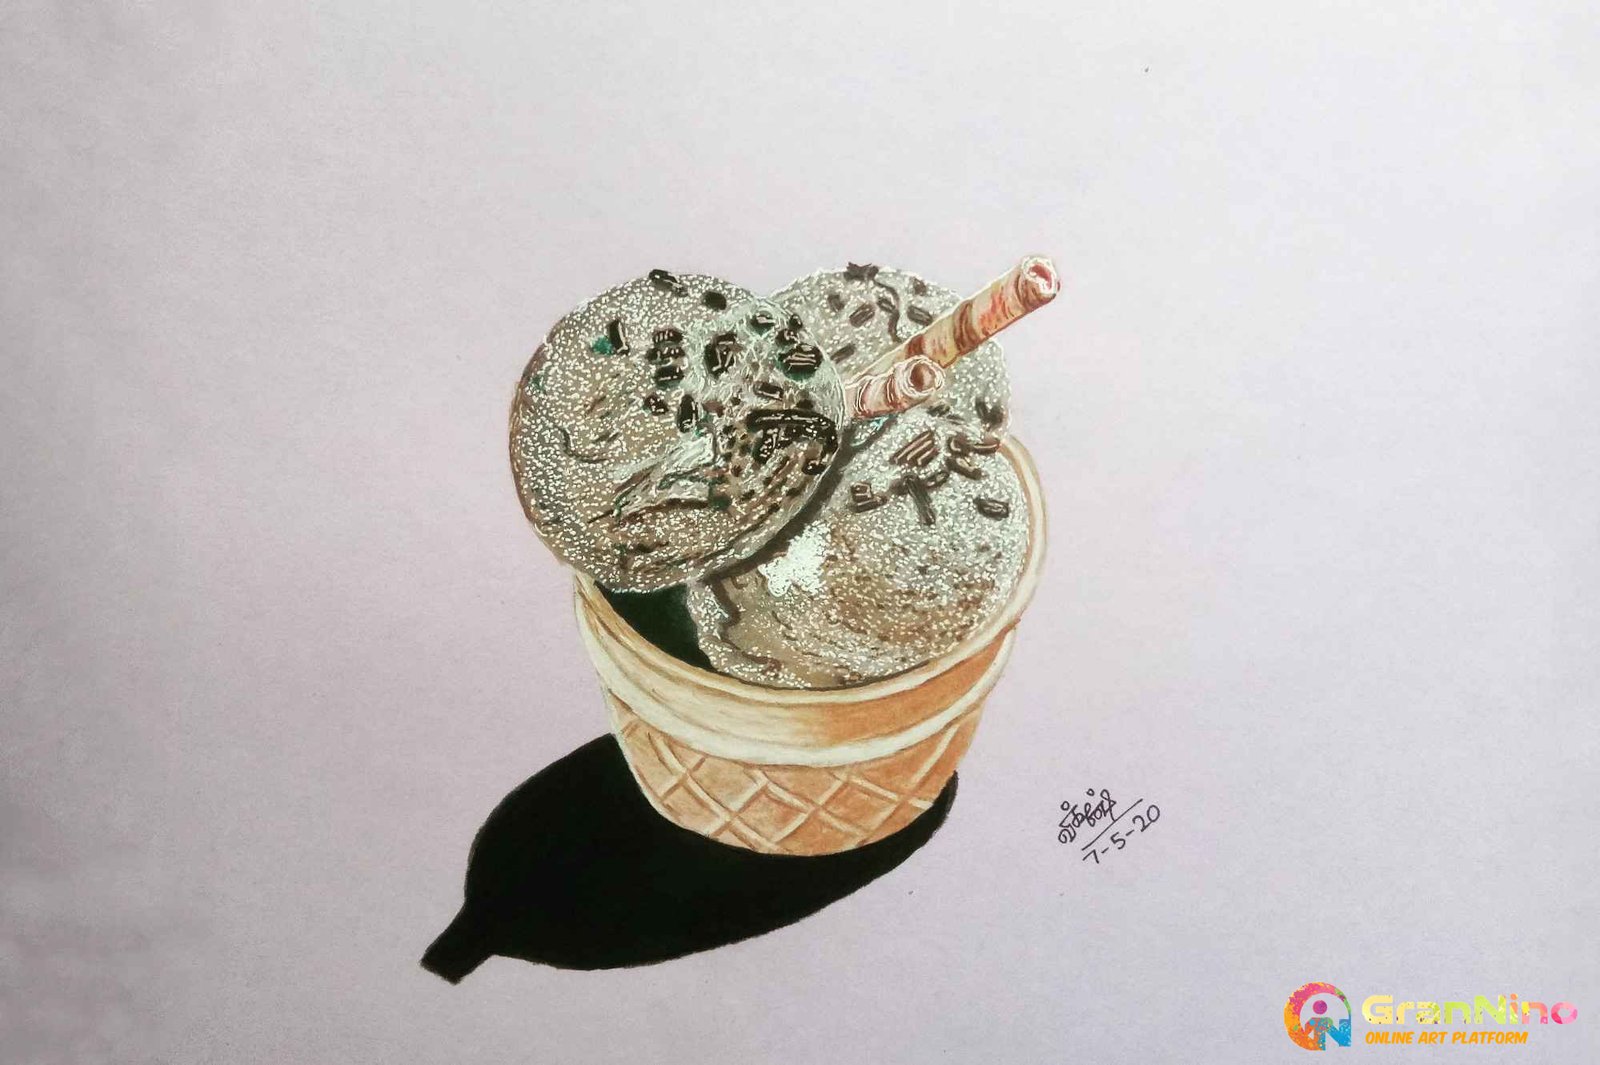 Ice Cream Coloring Page – Encinitas House of Art